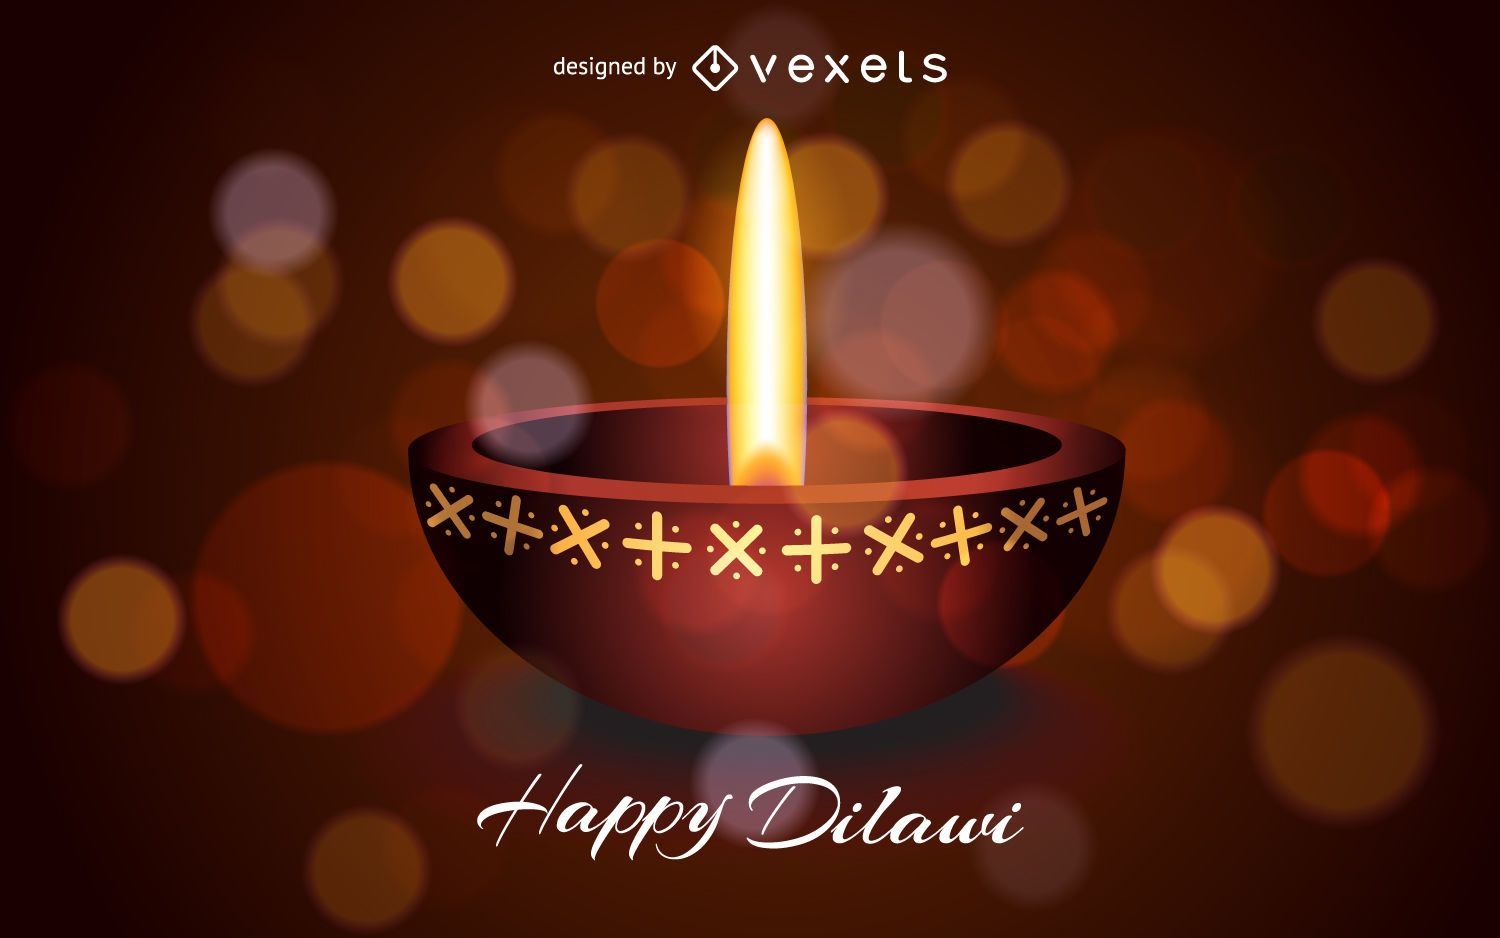 Diwali design in warm tones